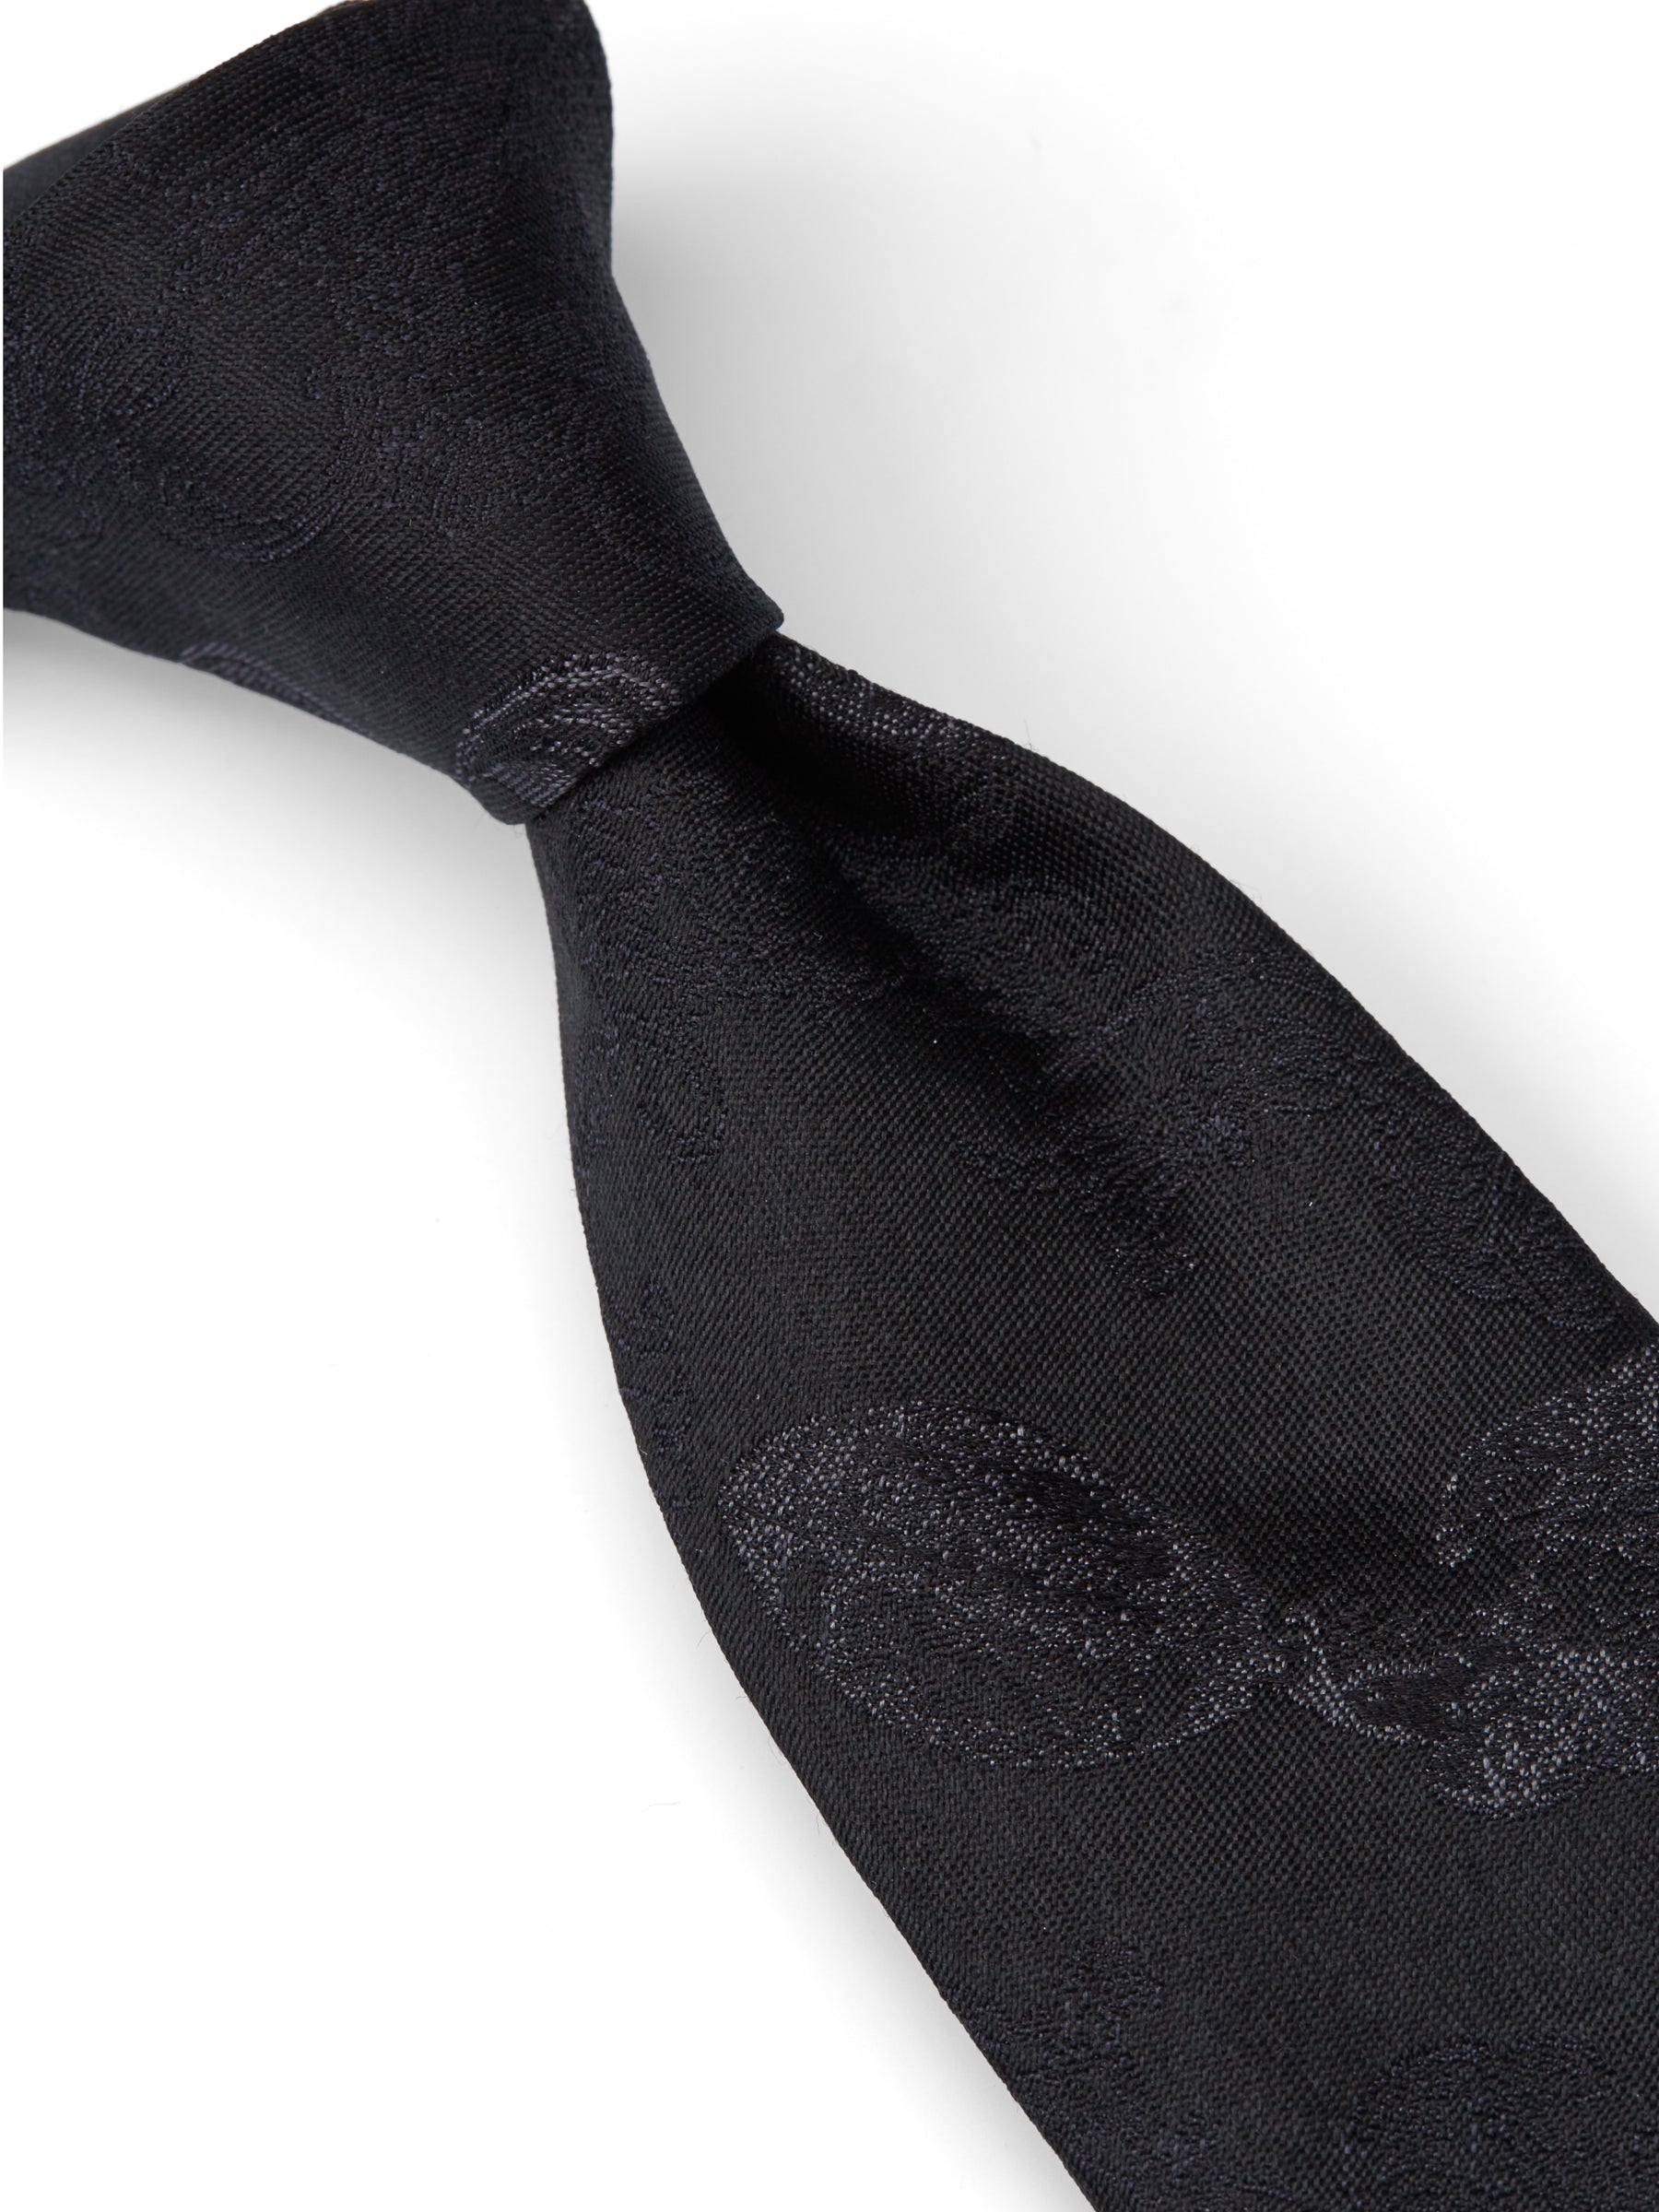 Black St Giles Silk Tie